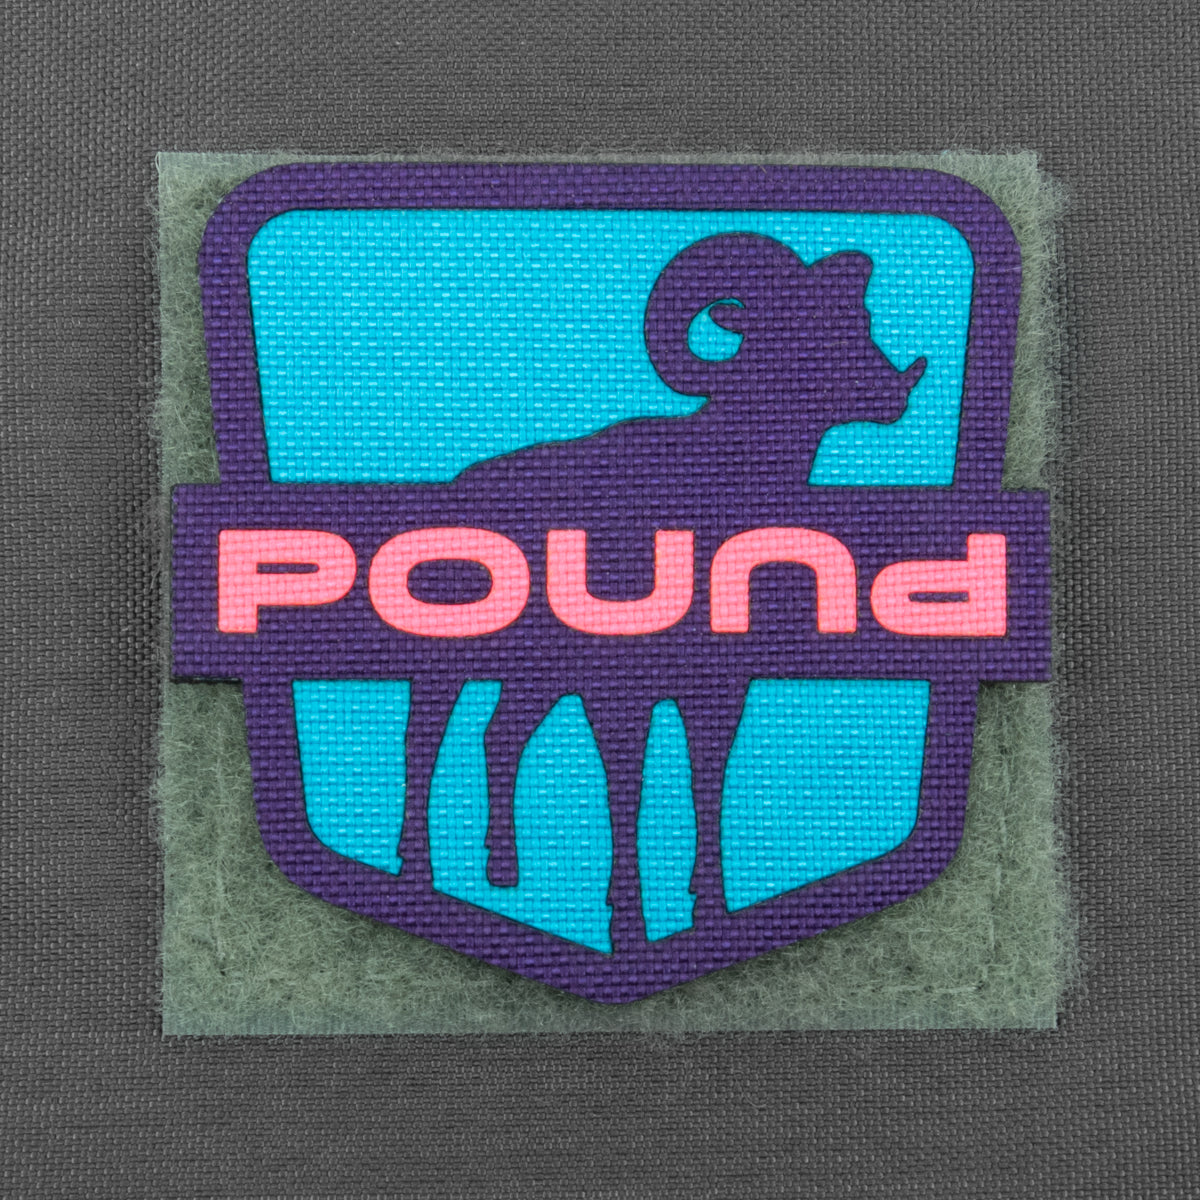 Dog Pound Velcro Patch – Dog Pound Discs